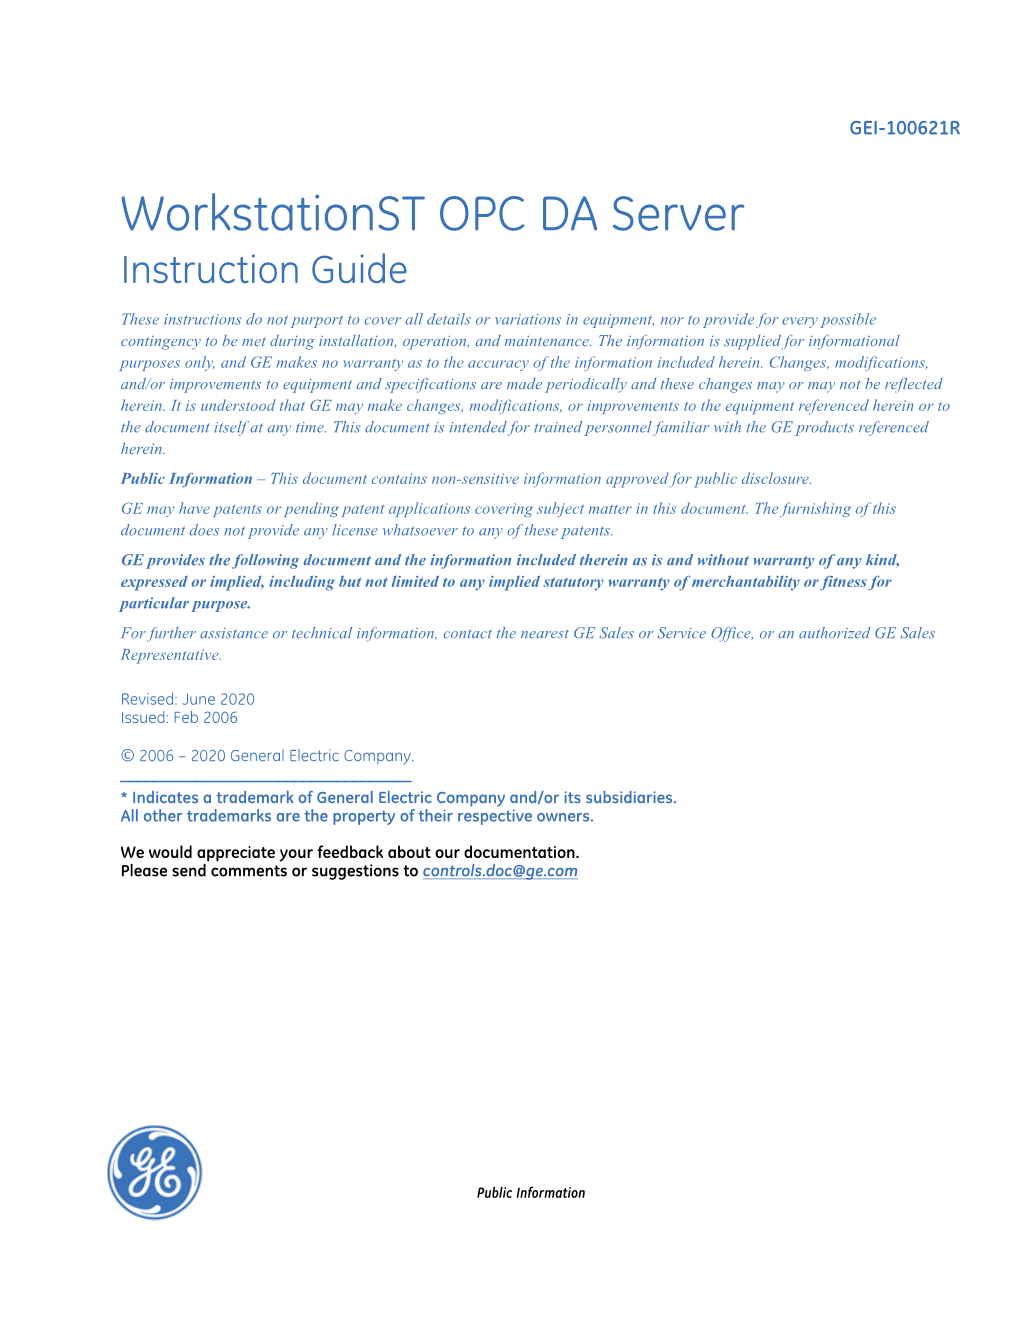 GEI-100621 Workstationst OPC DA Server Public Information Contents